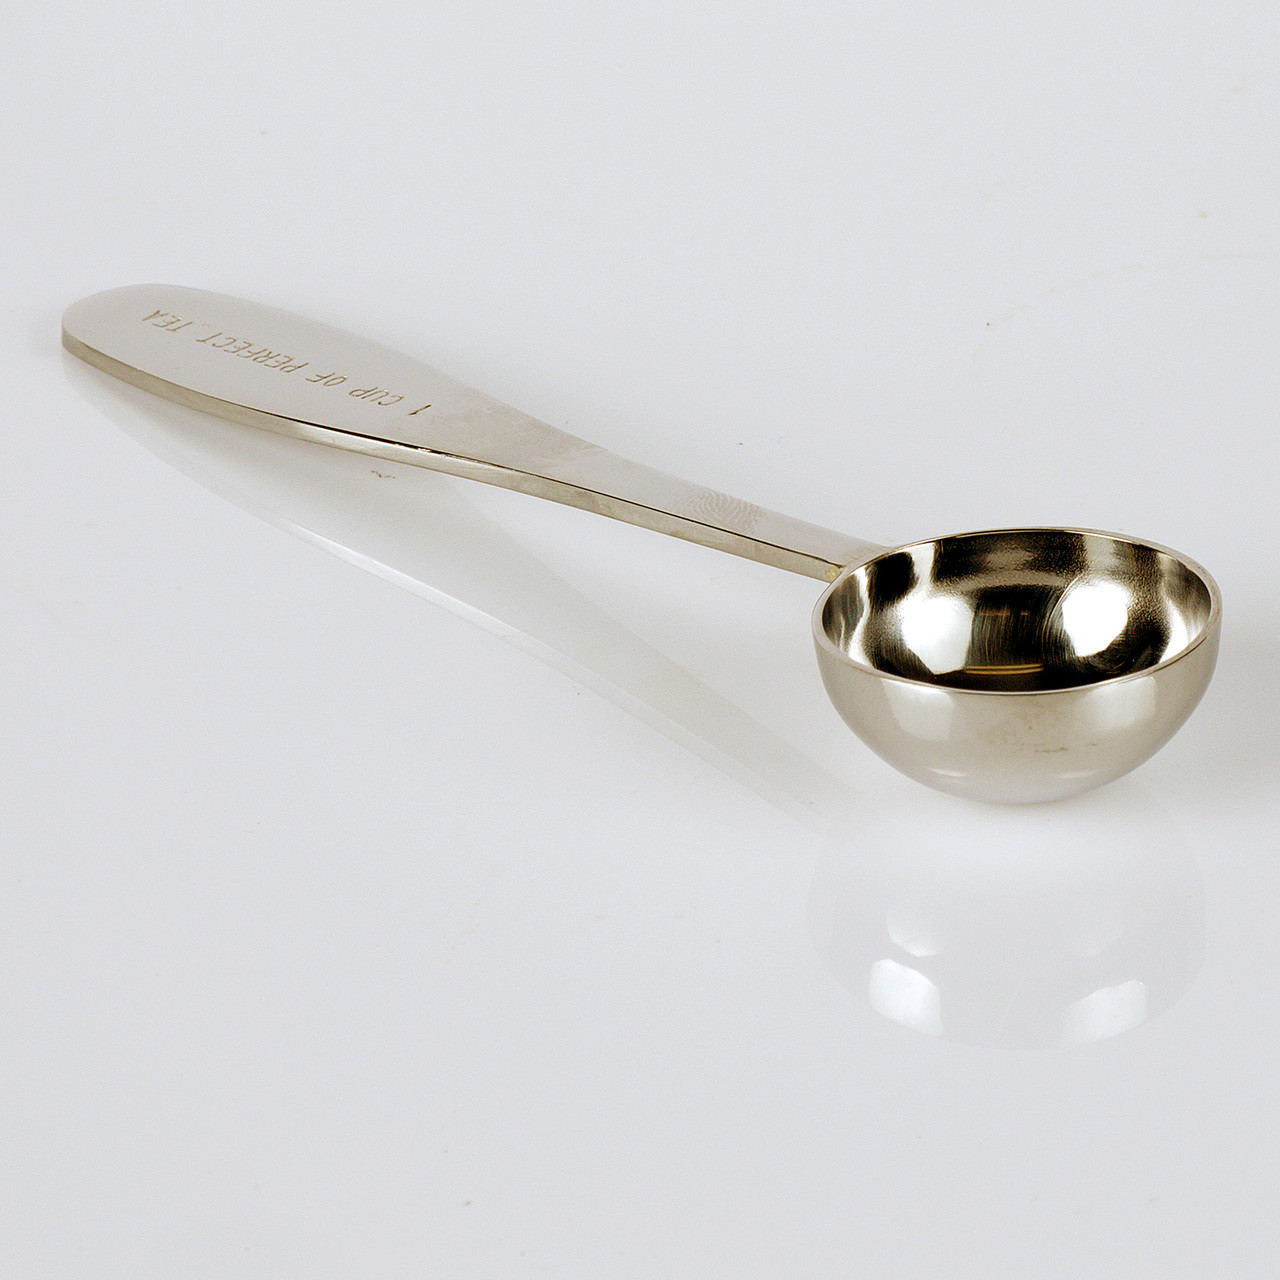 Perfect Cup - Tea Measuring Spoon